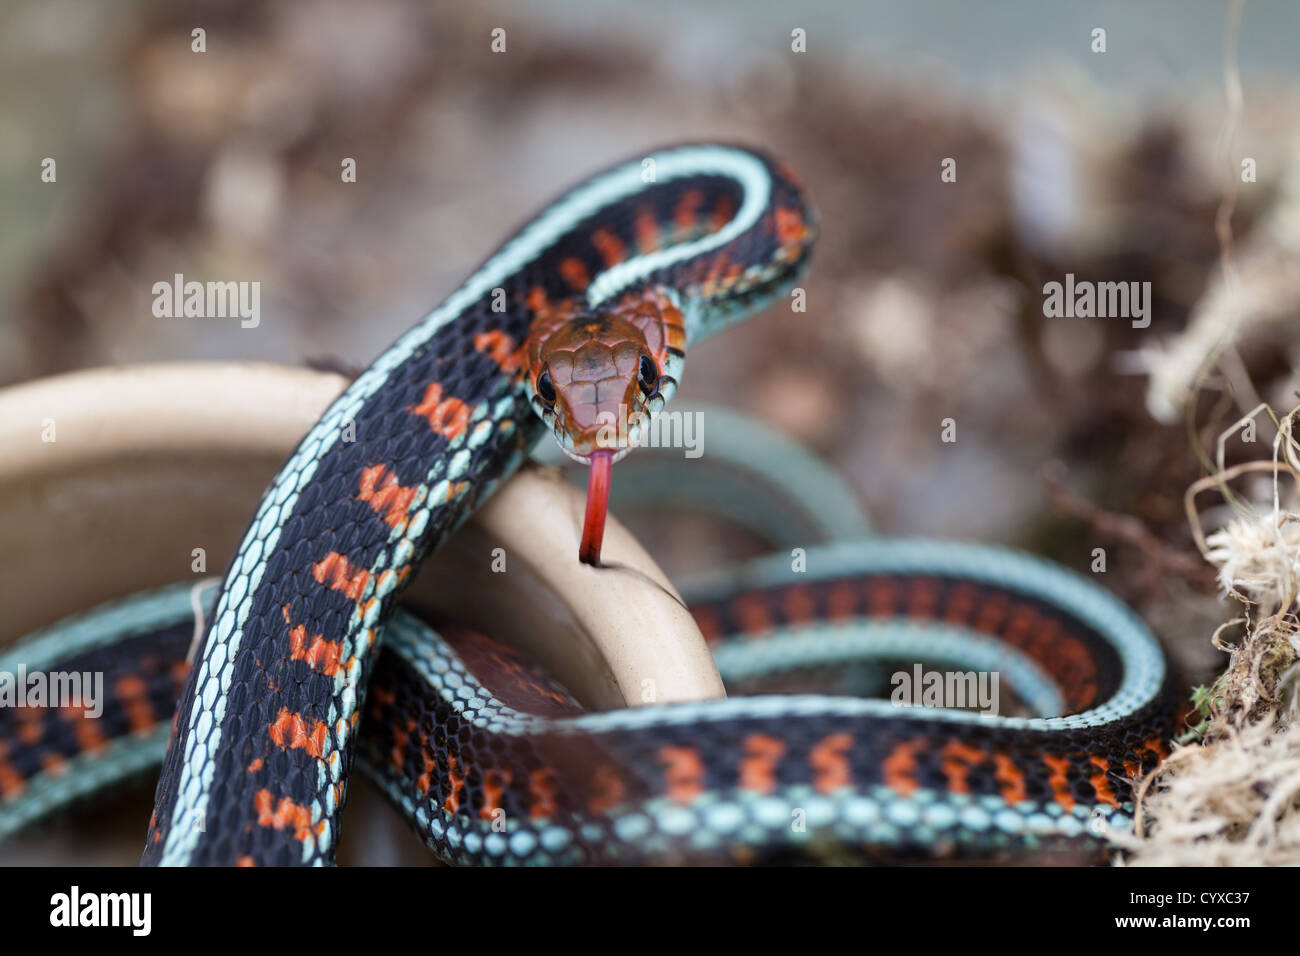 California Red-sided Garter Snake (Thamnophis sirtalis infernalis). Stock Photo